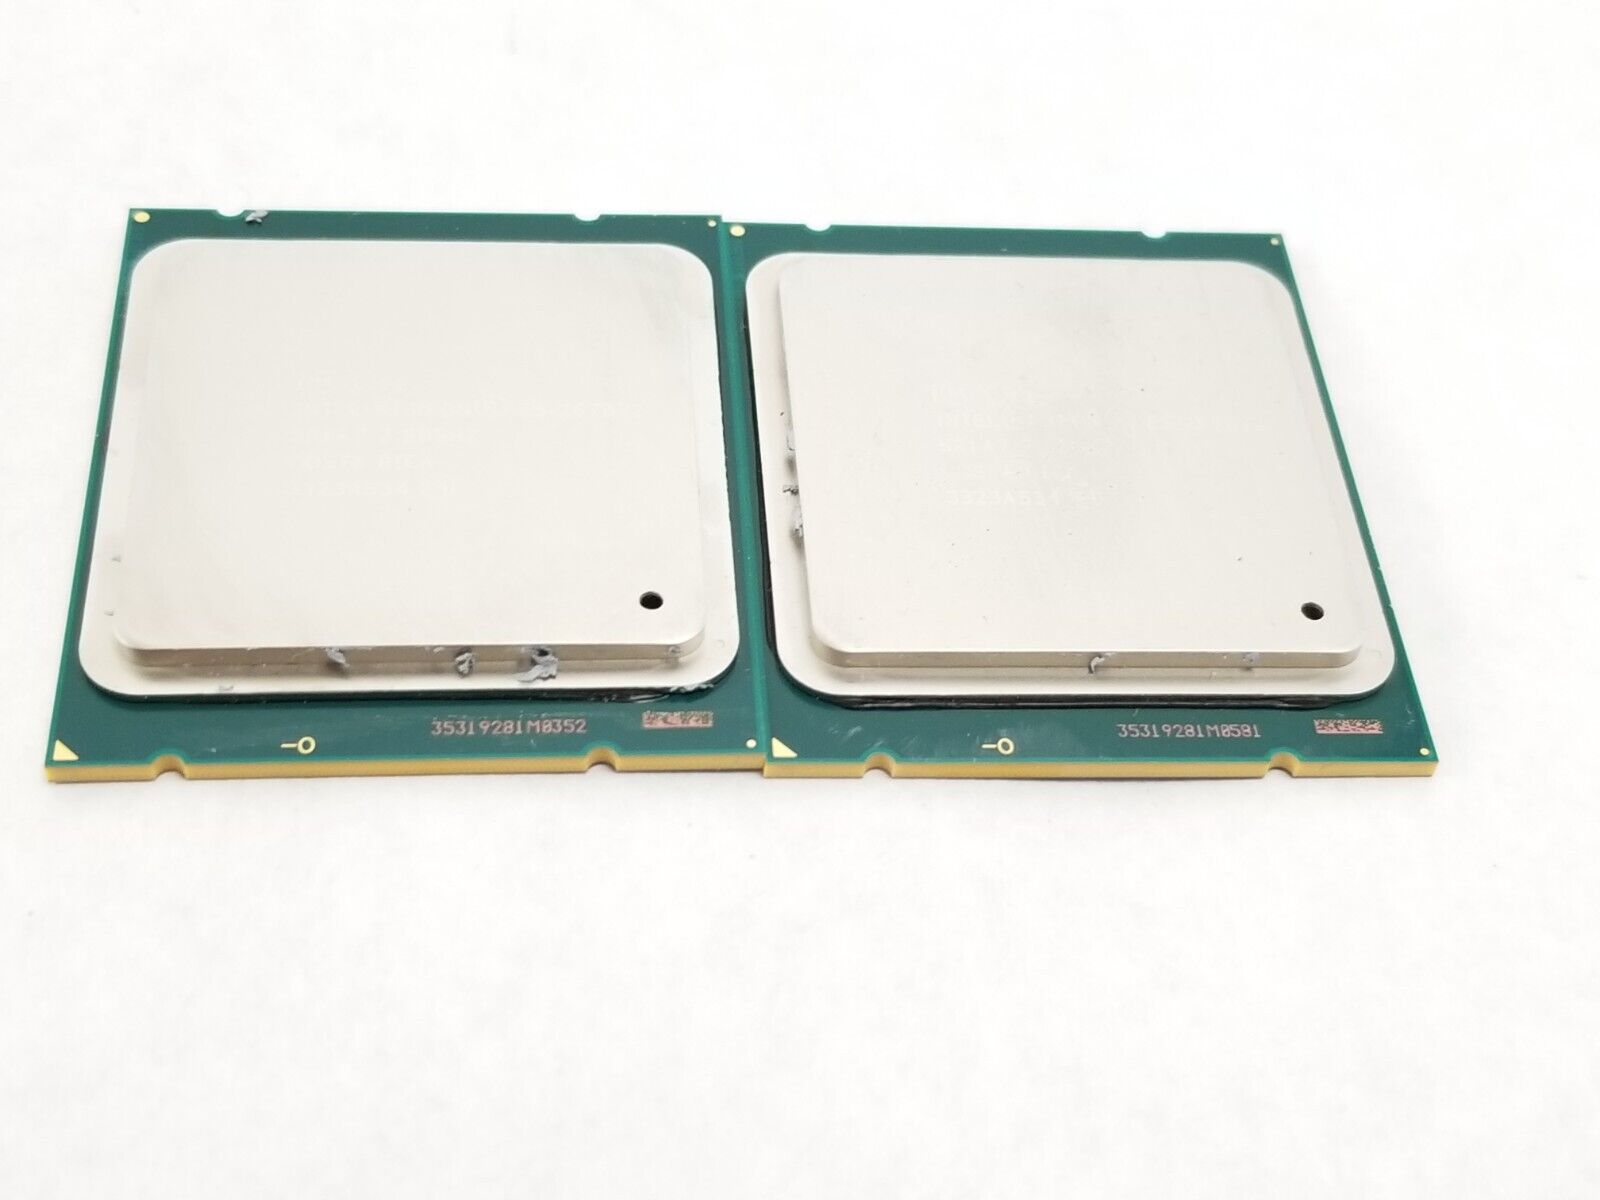 Matching Pair Intel Xeon E5-2670V2 SR1A7 2.50GHz LGA2011 Server CPU Processor